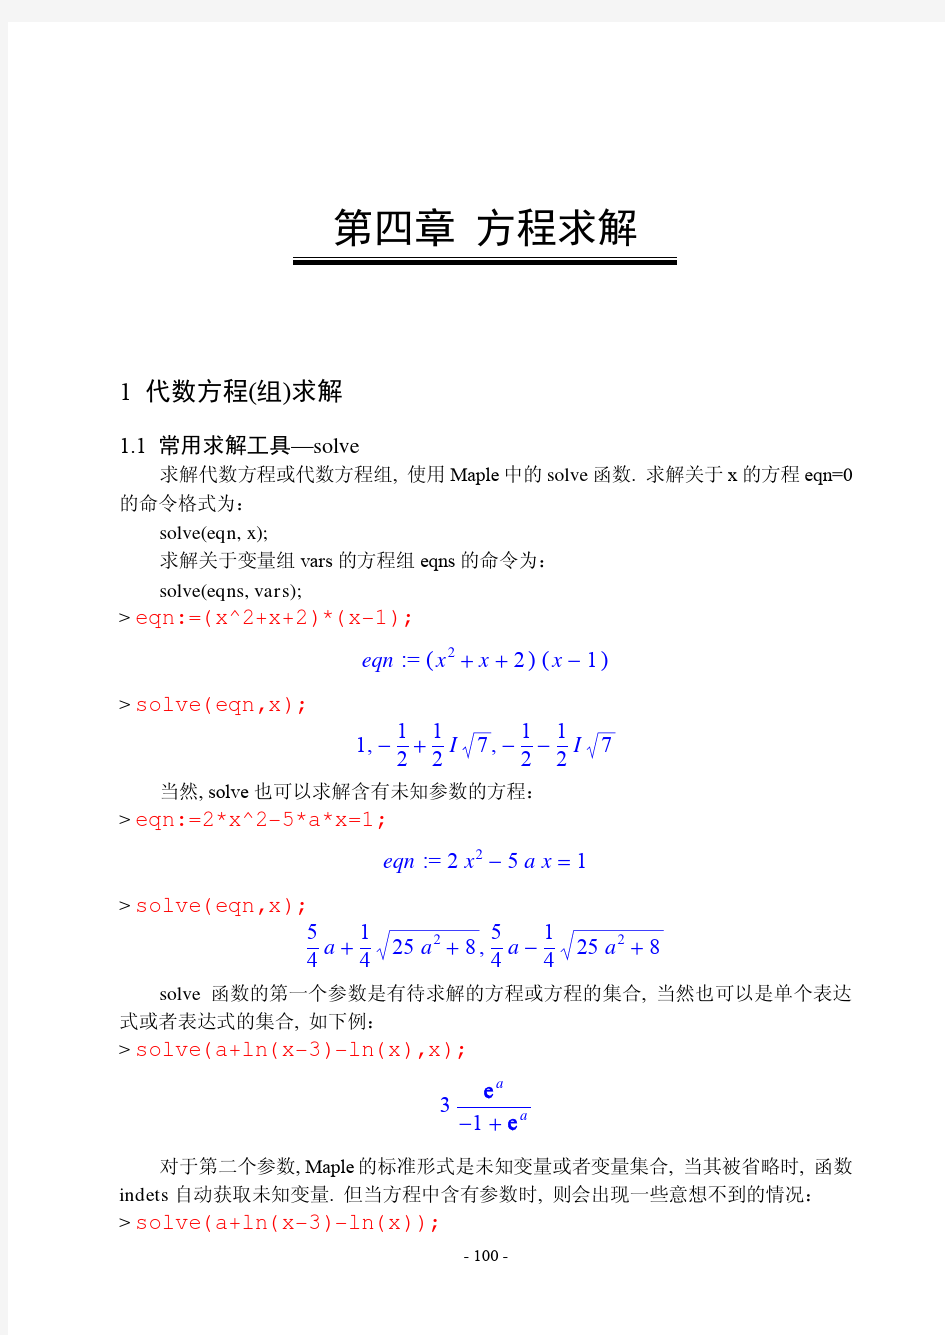 Maple教程 - 第4章 - 方程求解